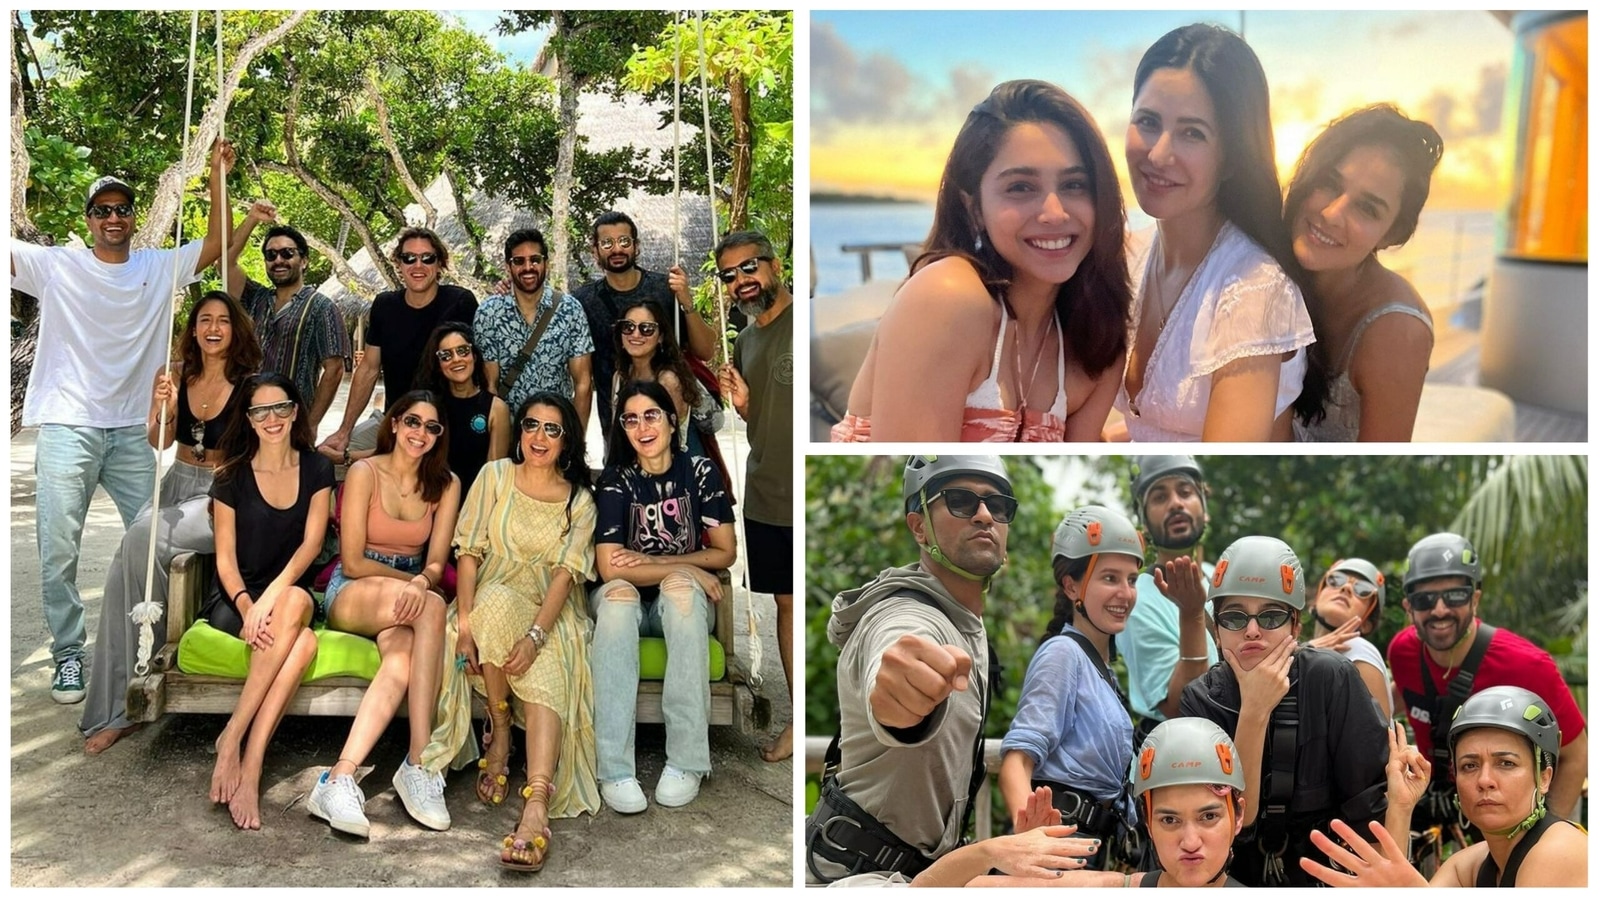 Sharvari Wagh shares more fun pics with Vicky Kaushal, Katrina Kaif, Ileana D’Cruz from Maldives vacation. See here